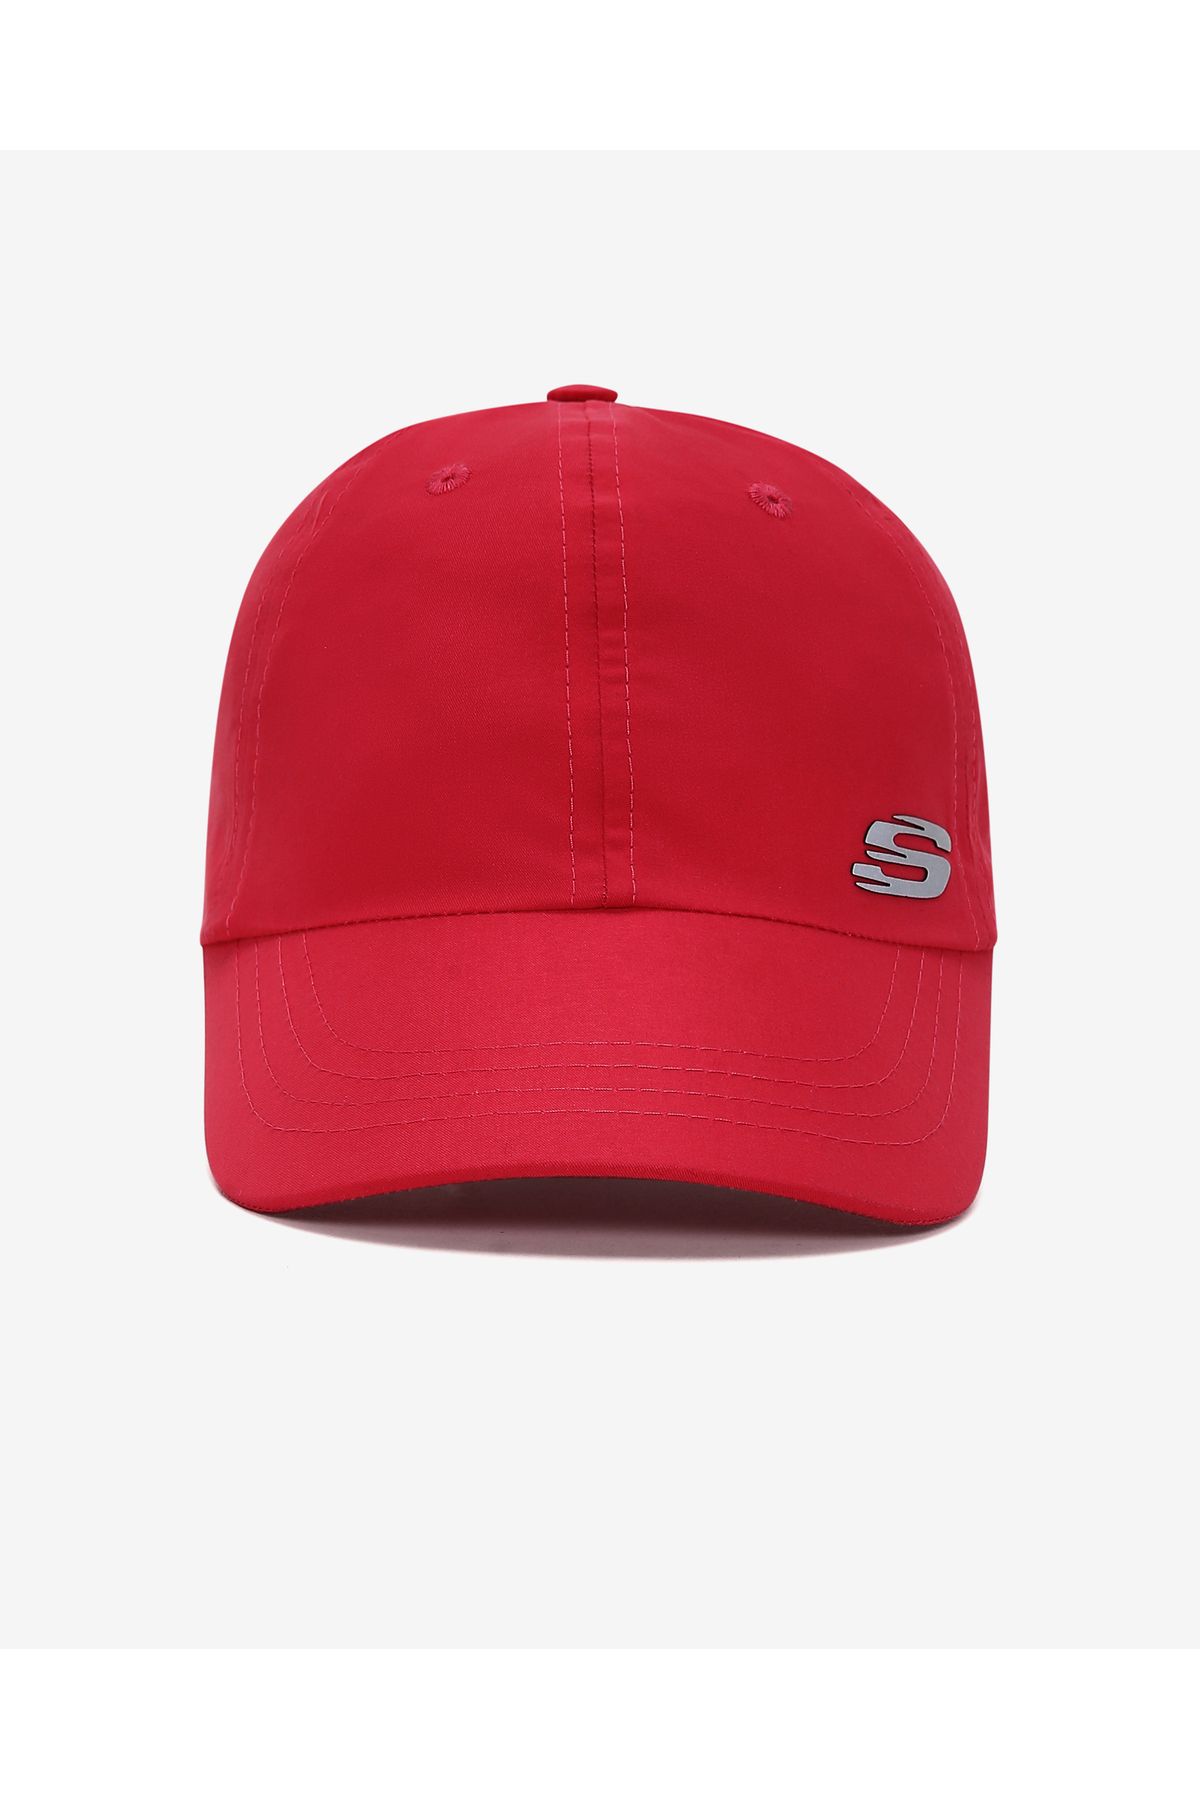 Skechers M Summer Acc Cap Cap Erkek Kırmızı Şapka S231481-600